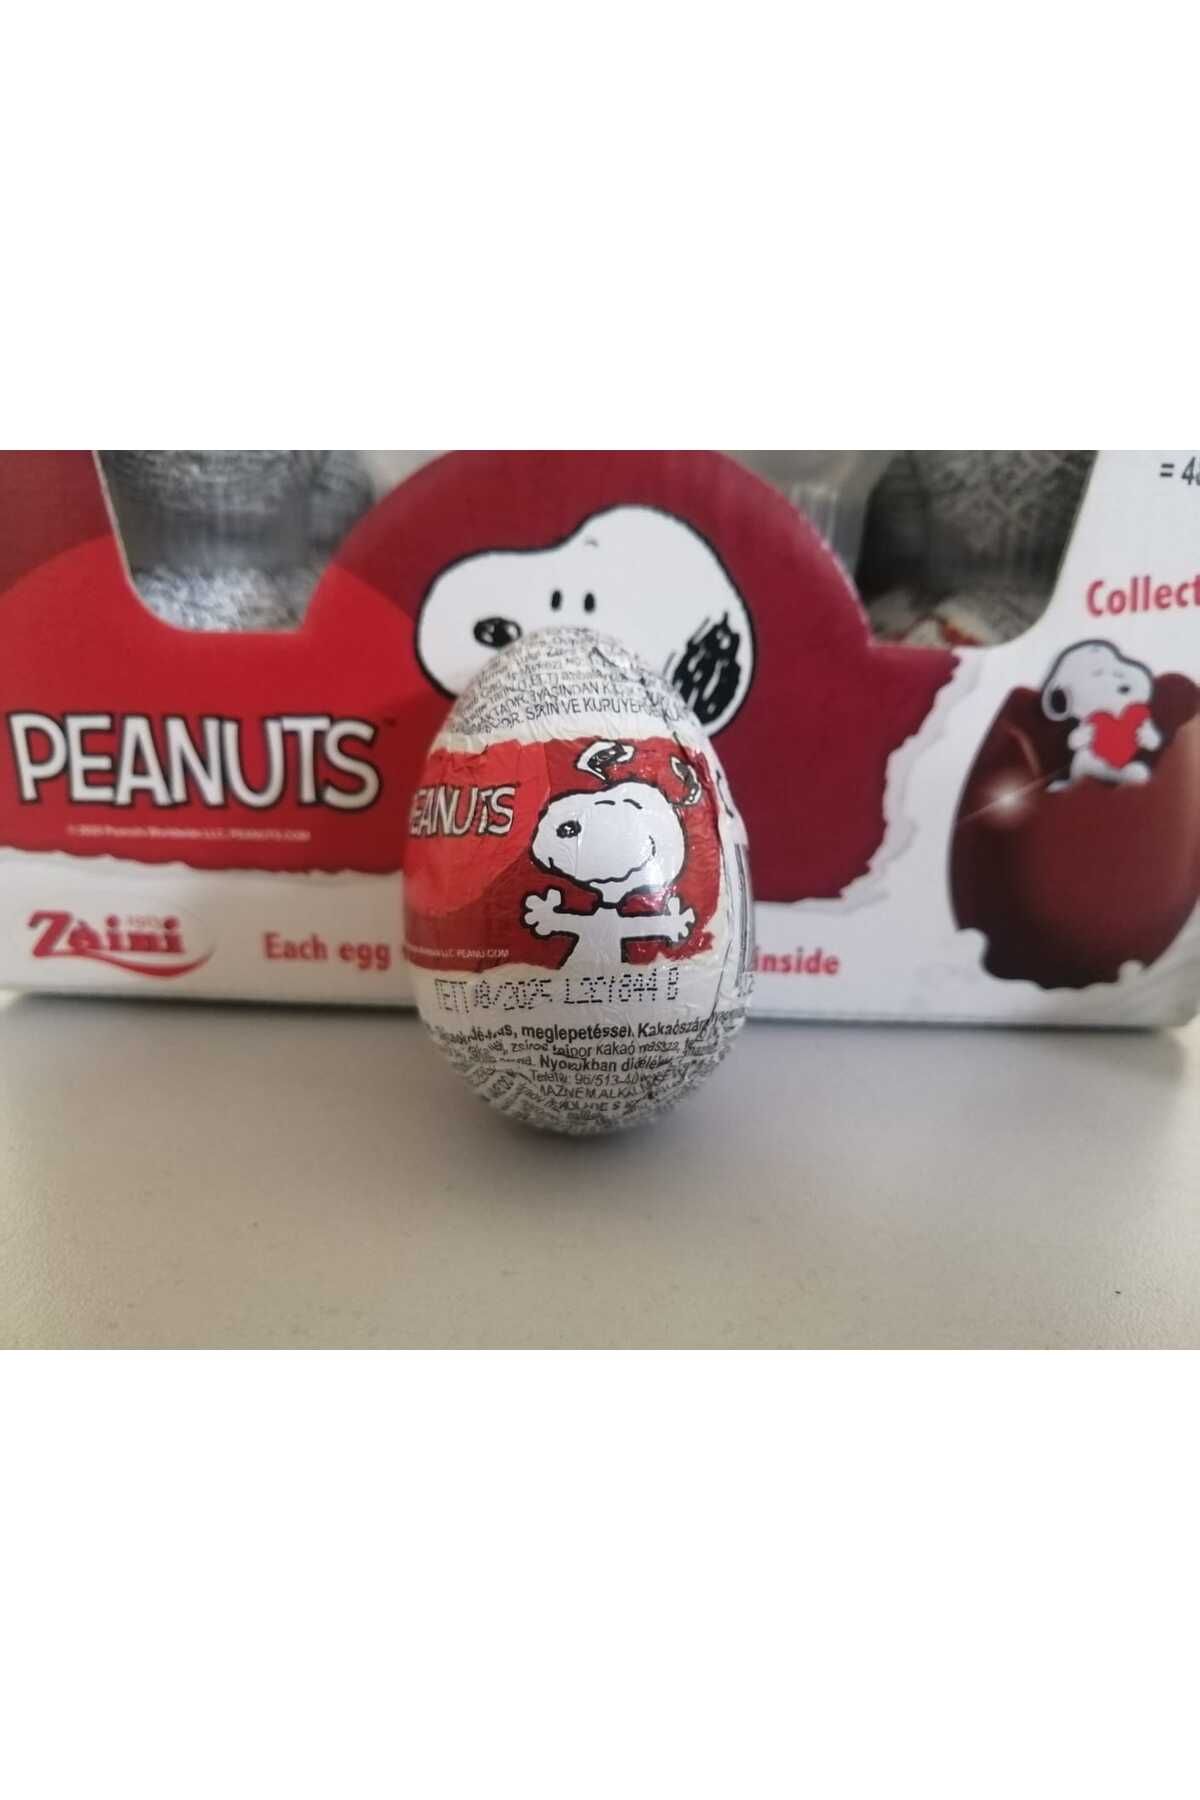 Zaini Snoopy (Peanuts) Çikolatalı Sürpriz Yumurta 20gr